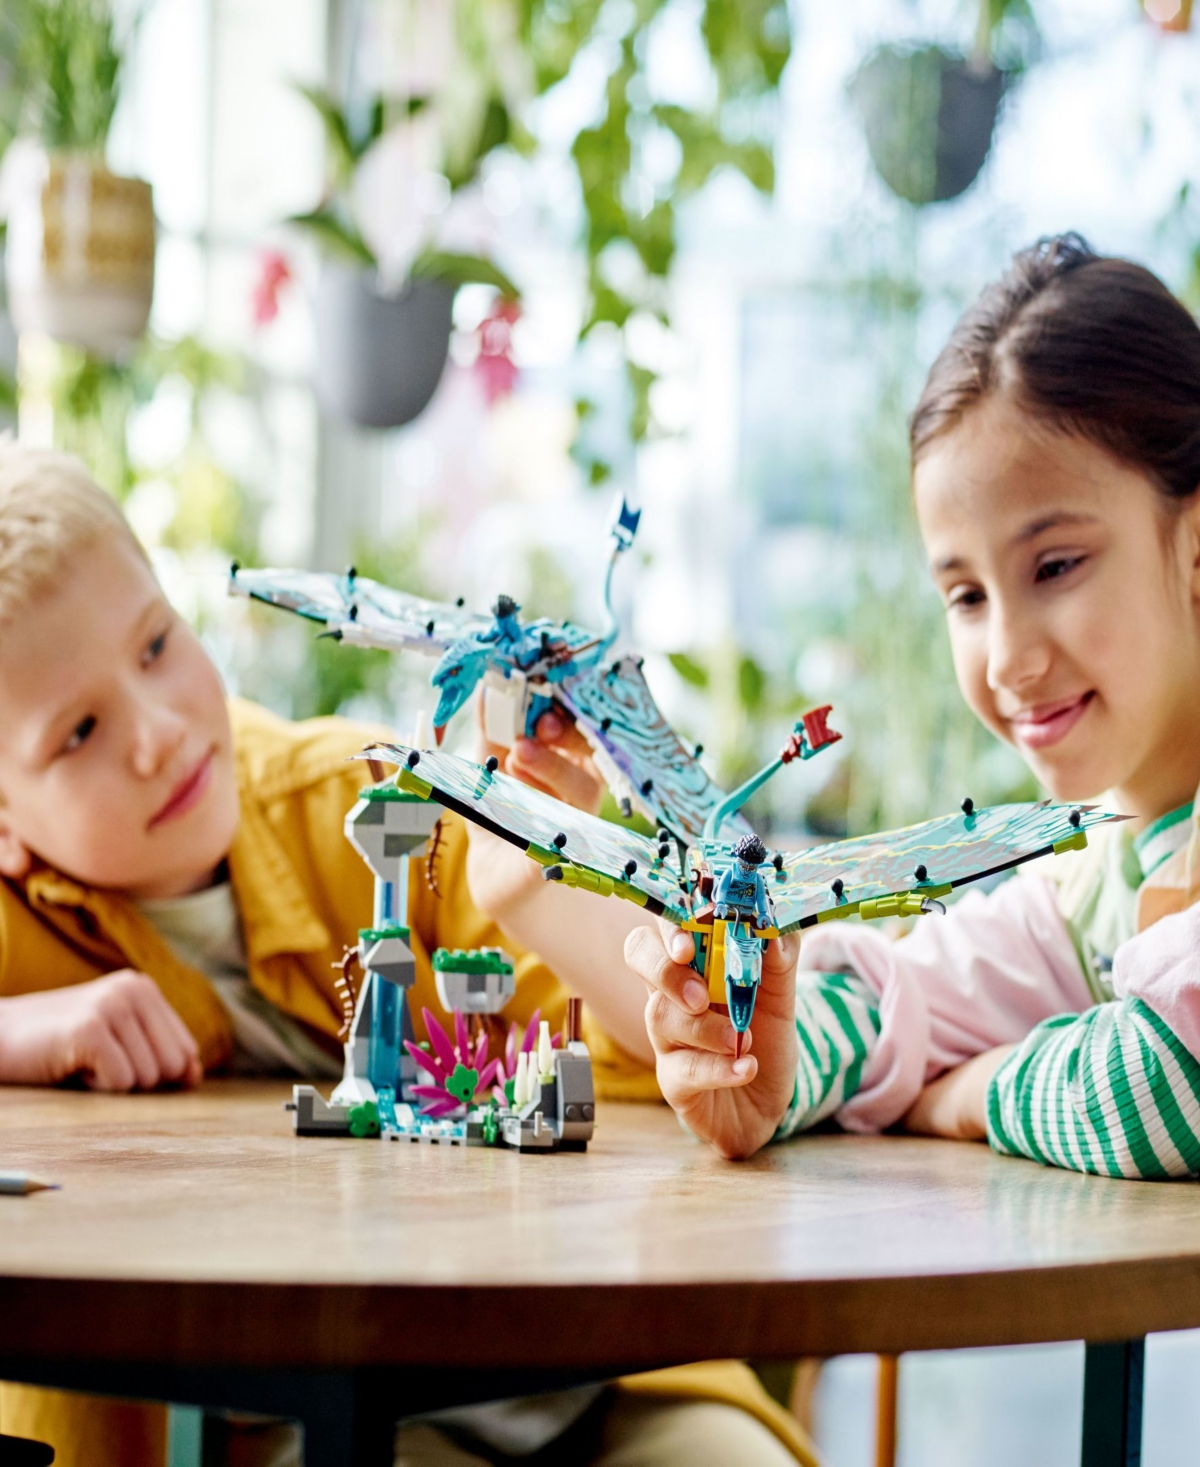 Shop Lego Avatar Jake Neytiri's First Banshee Flight 75572 Toy Building Set In Multicolor